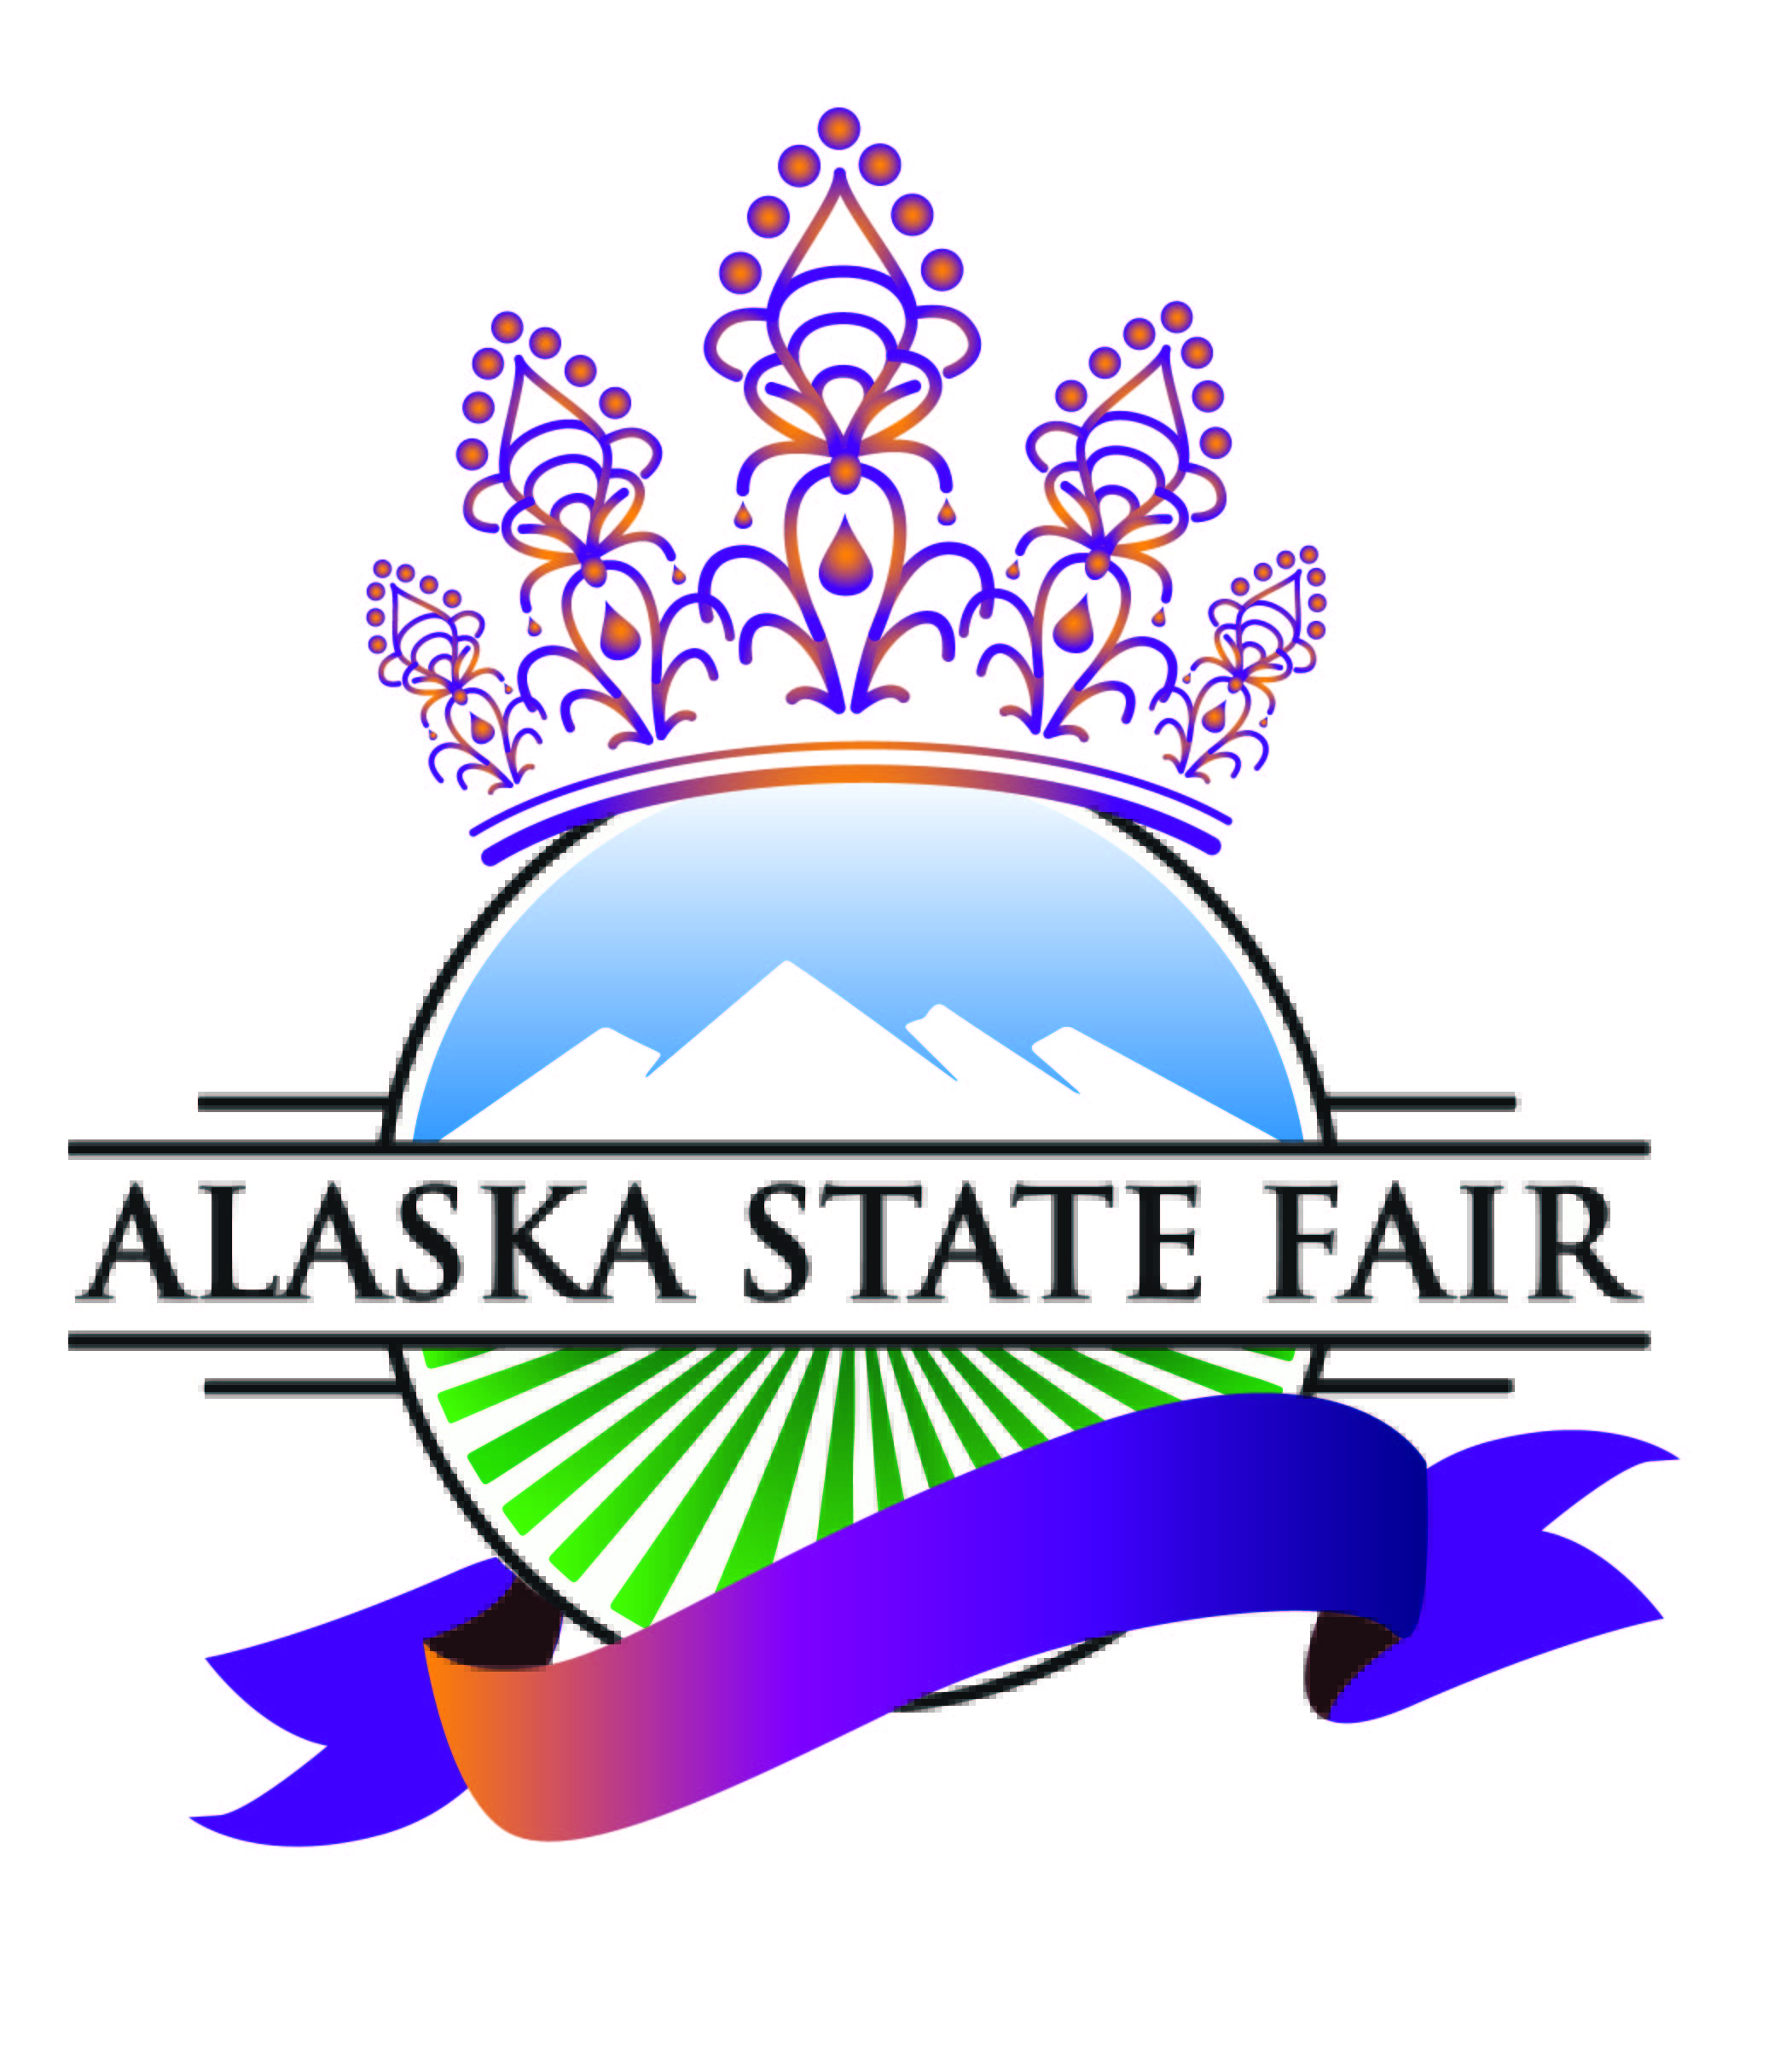 pageant logos 04 alaska state fair pageant logos 04 alaska state fair